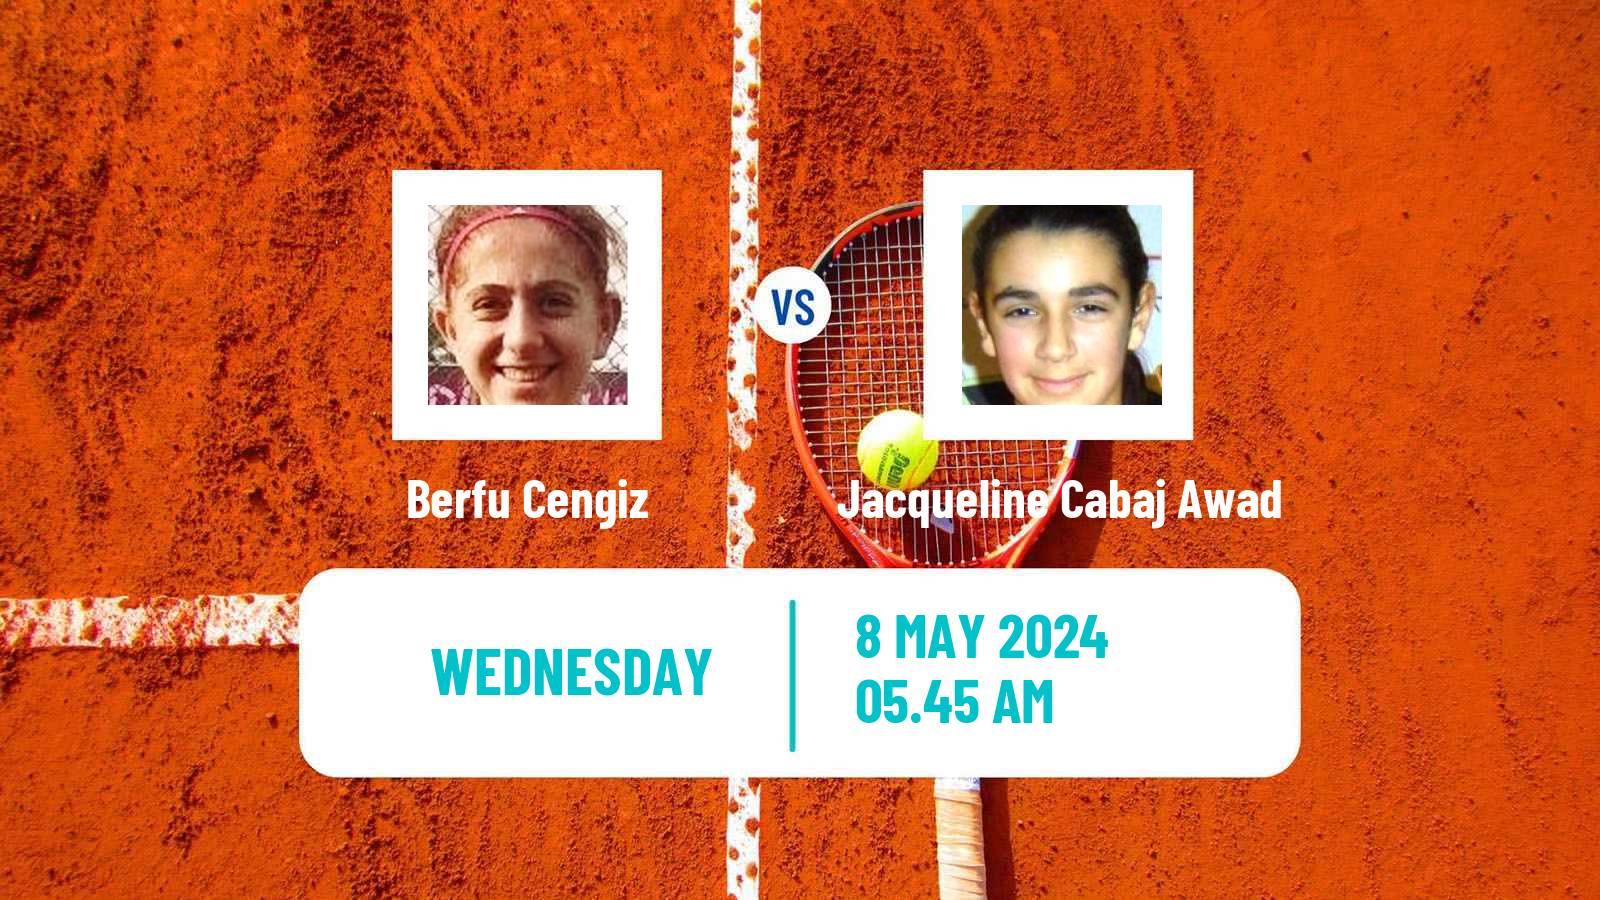 Tennis ITF W35 Bastad Women Berfu Cengiz - Jacqueline Cabaj Awad